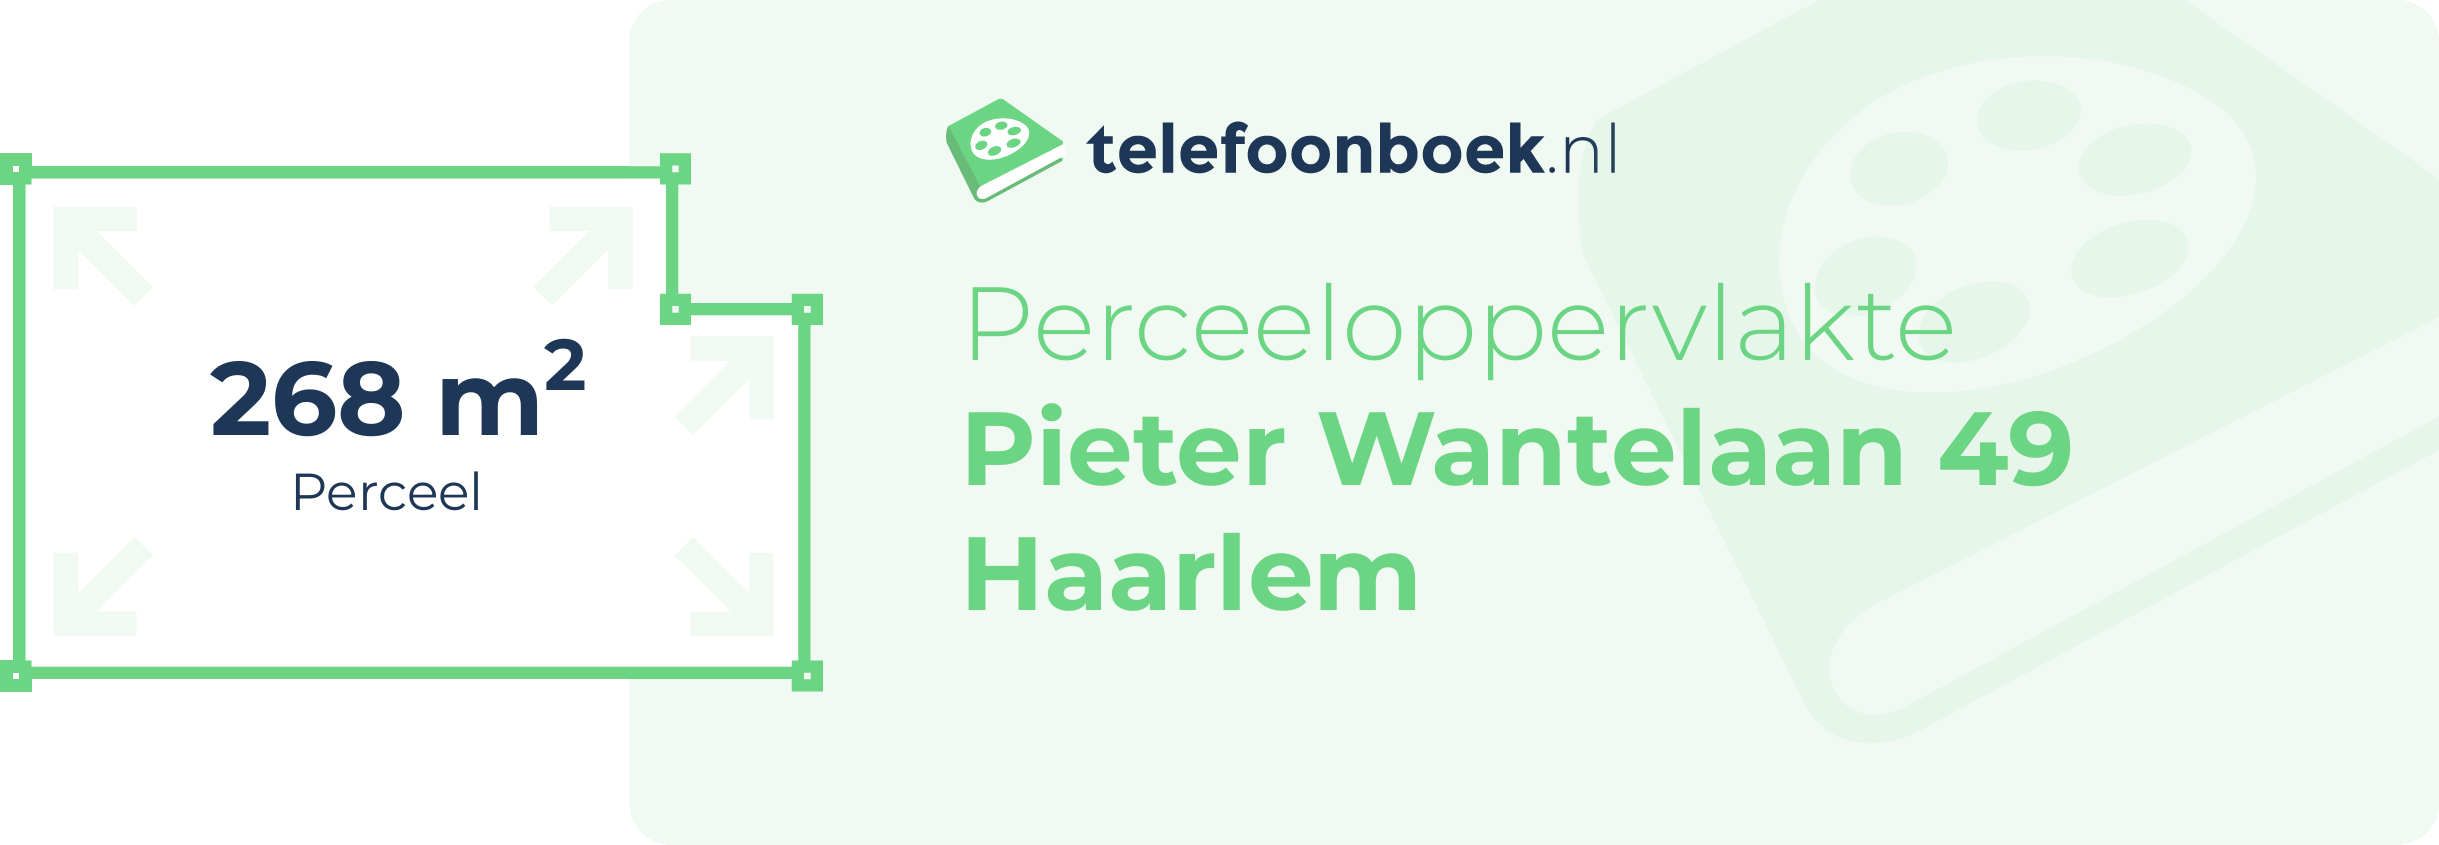 Perceeloppervlakte Pieter Wantelaan 49 Haarlem